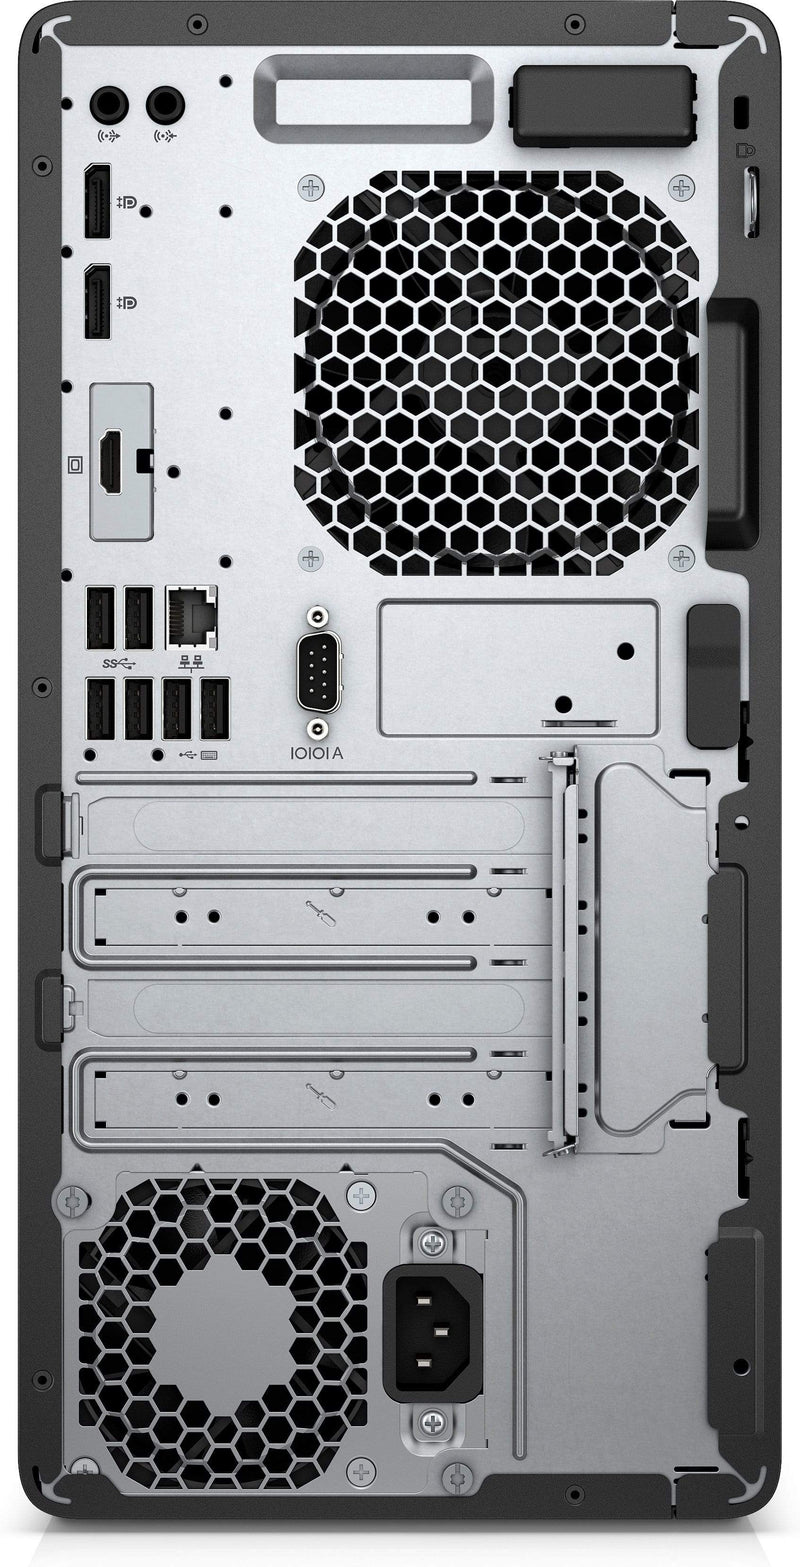 HP EliteDesk 705 G4 AMD Ryzen 5 2400G 8GB RAM 1TB HDD Micro Tower PC Black,Silver Windows 10 Pro 4HN11EA